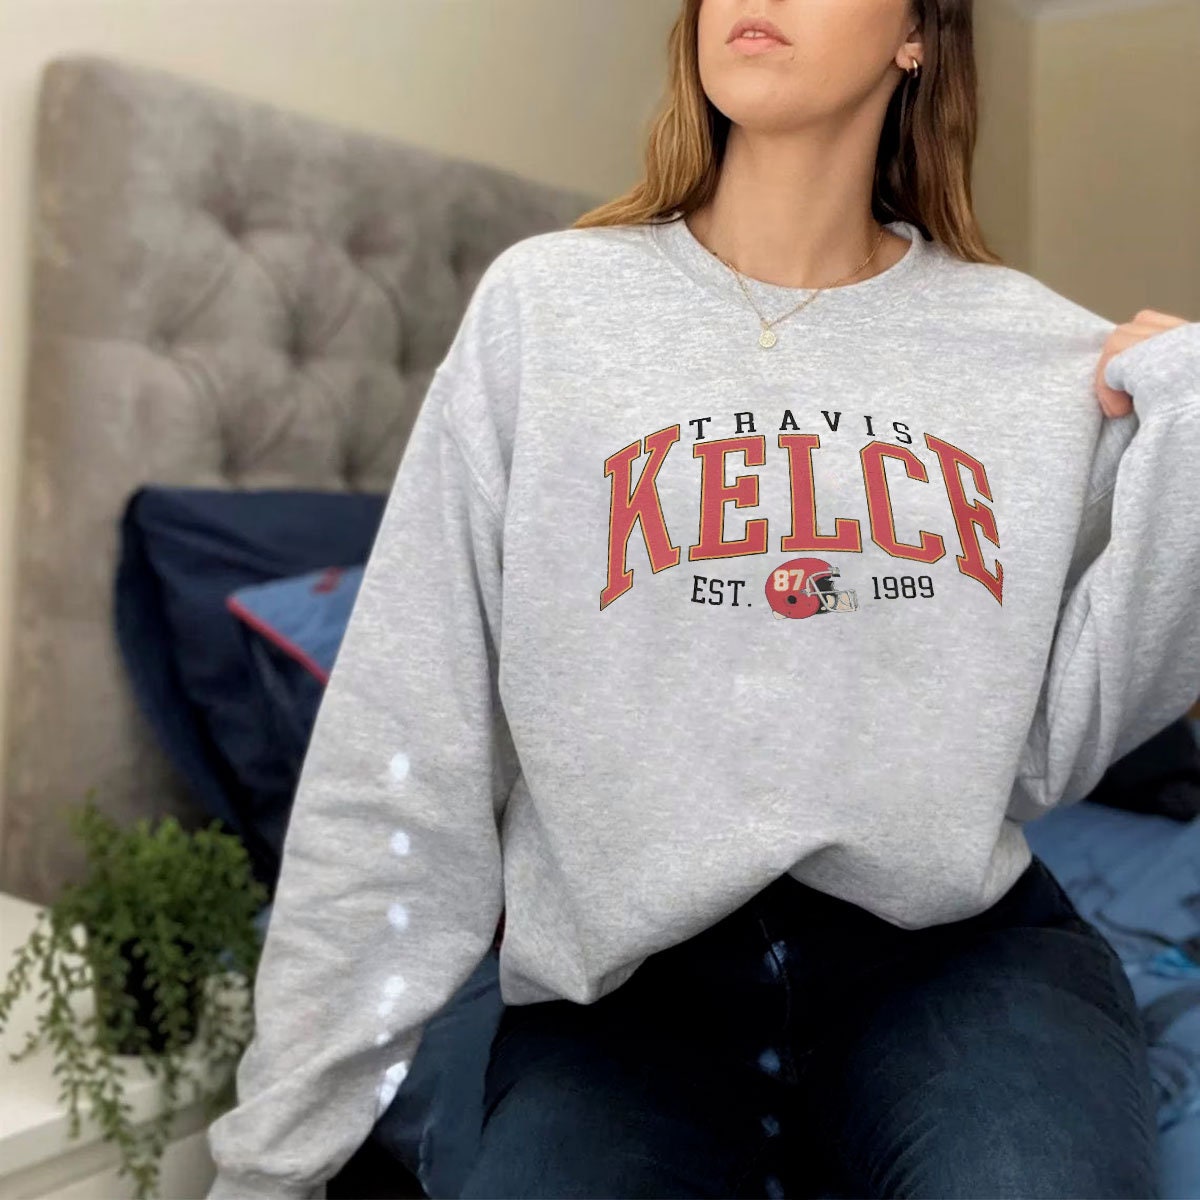 Discover Travis Kelce Vintage Shirt, Travis Kelce Football